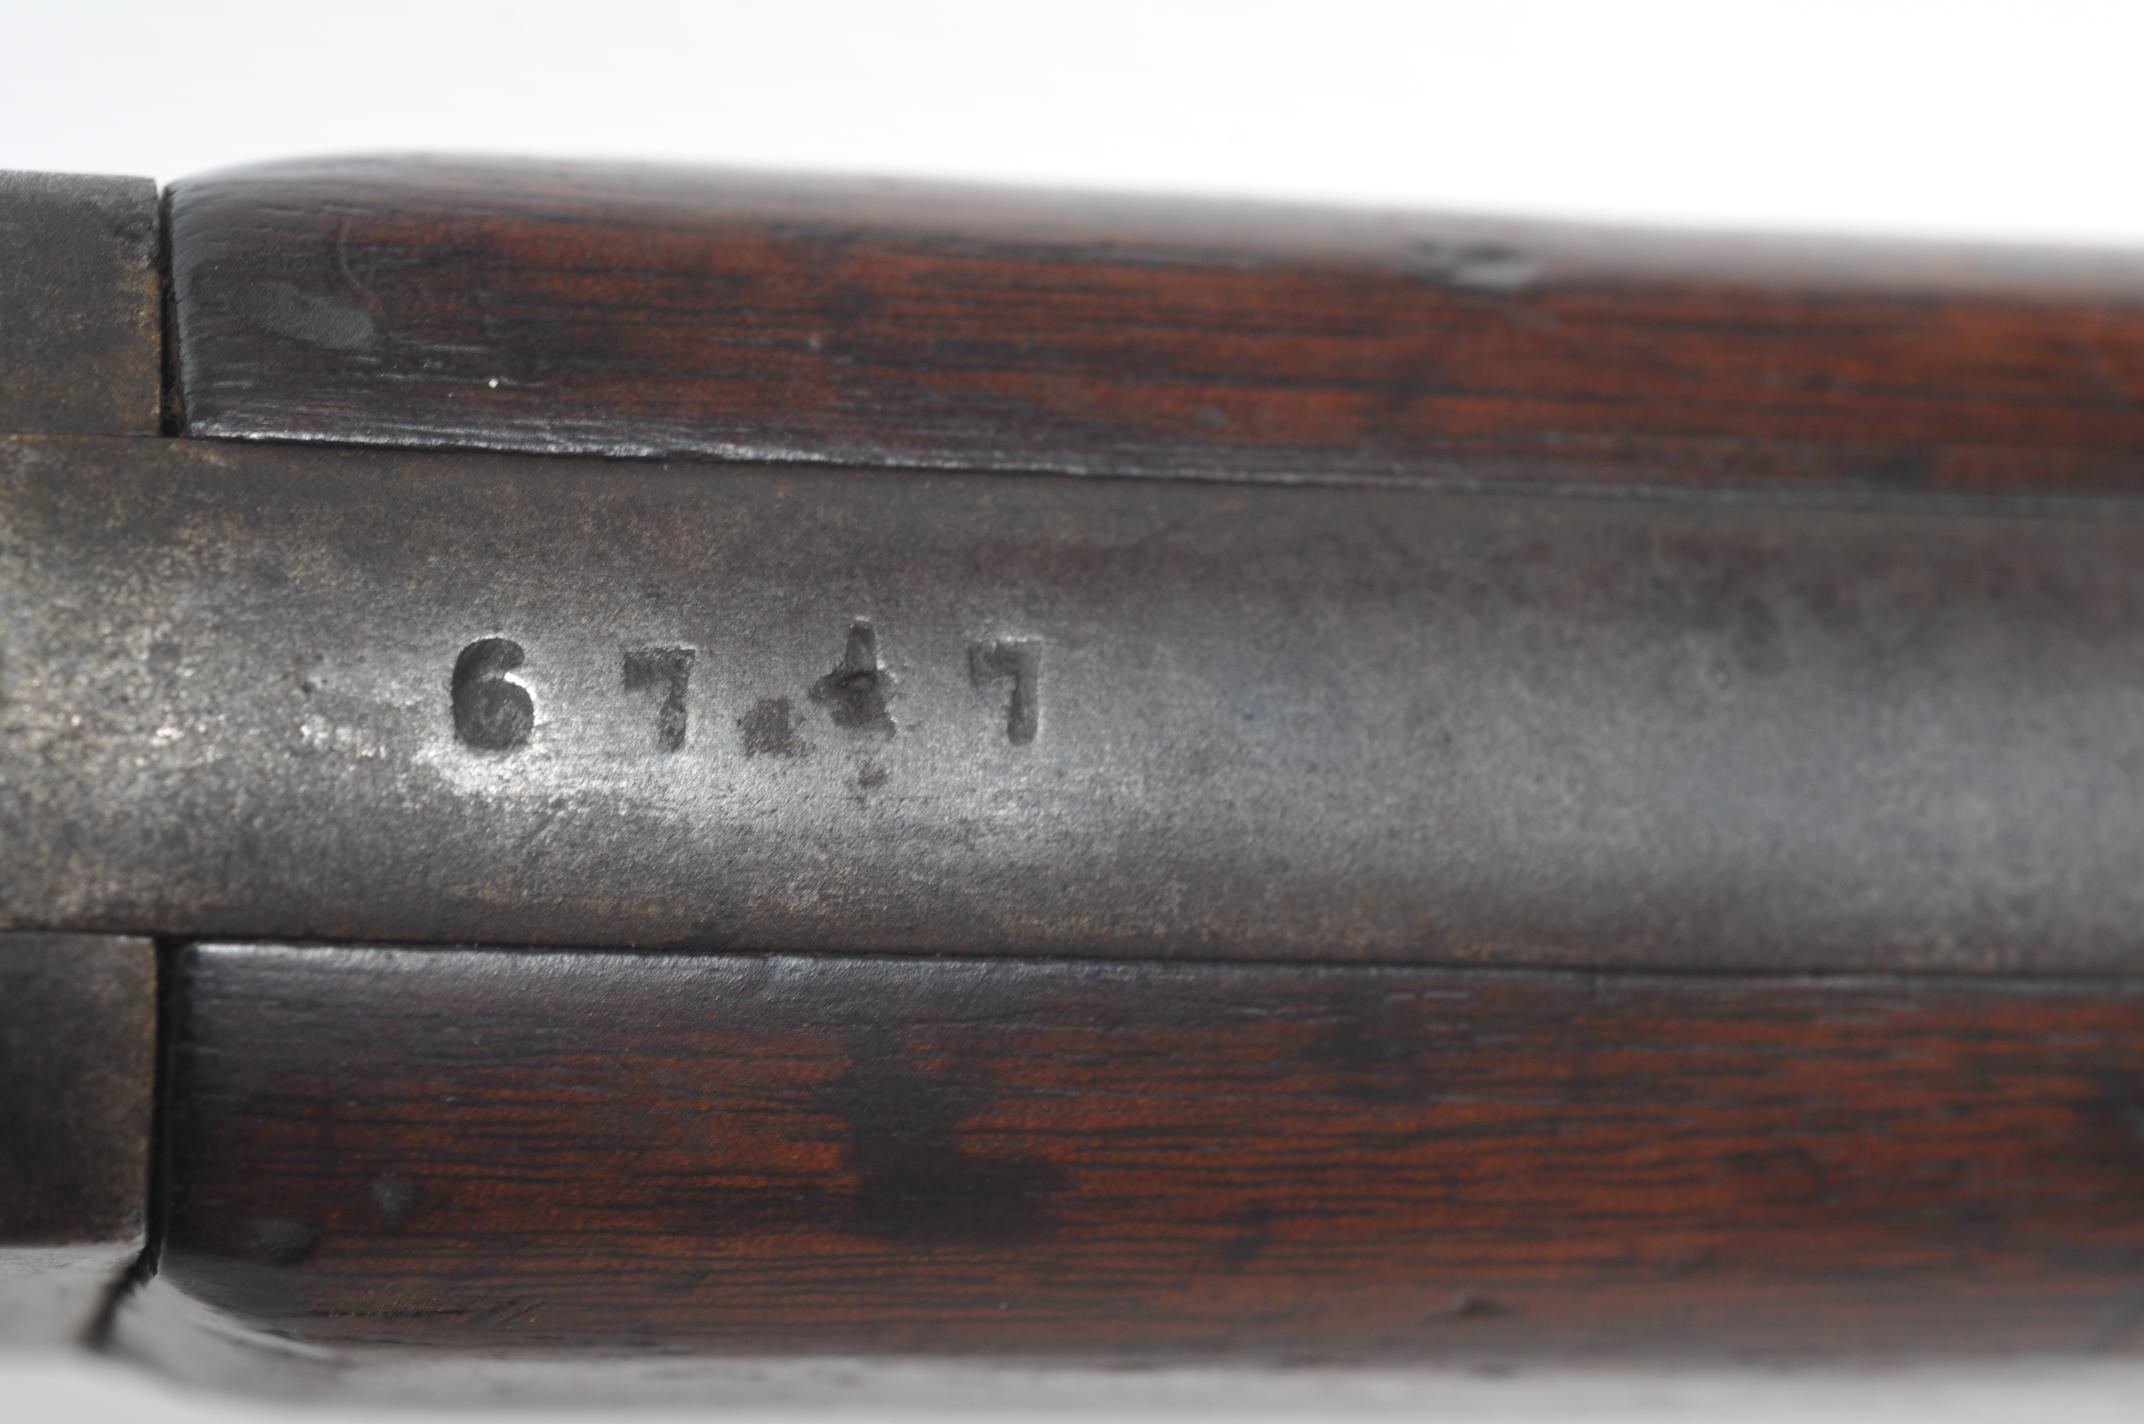 Civil War era Sharps and Hankins Naval Model .52 Rimfire Carbine - Antique - no FFL needed (KDW1)